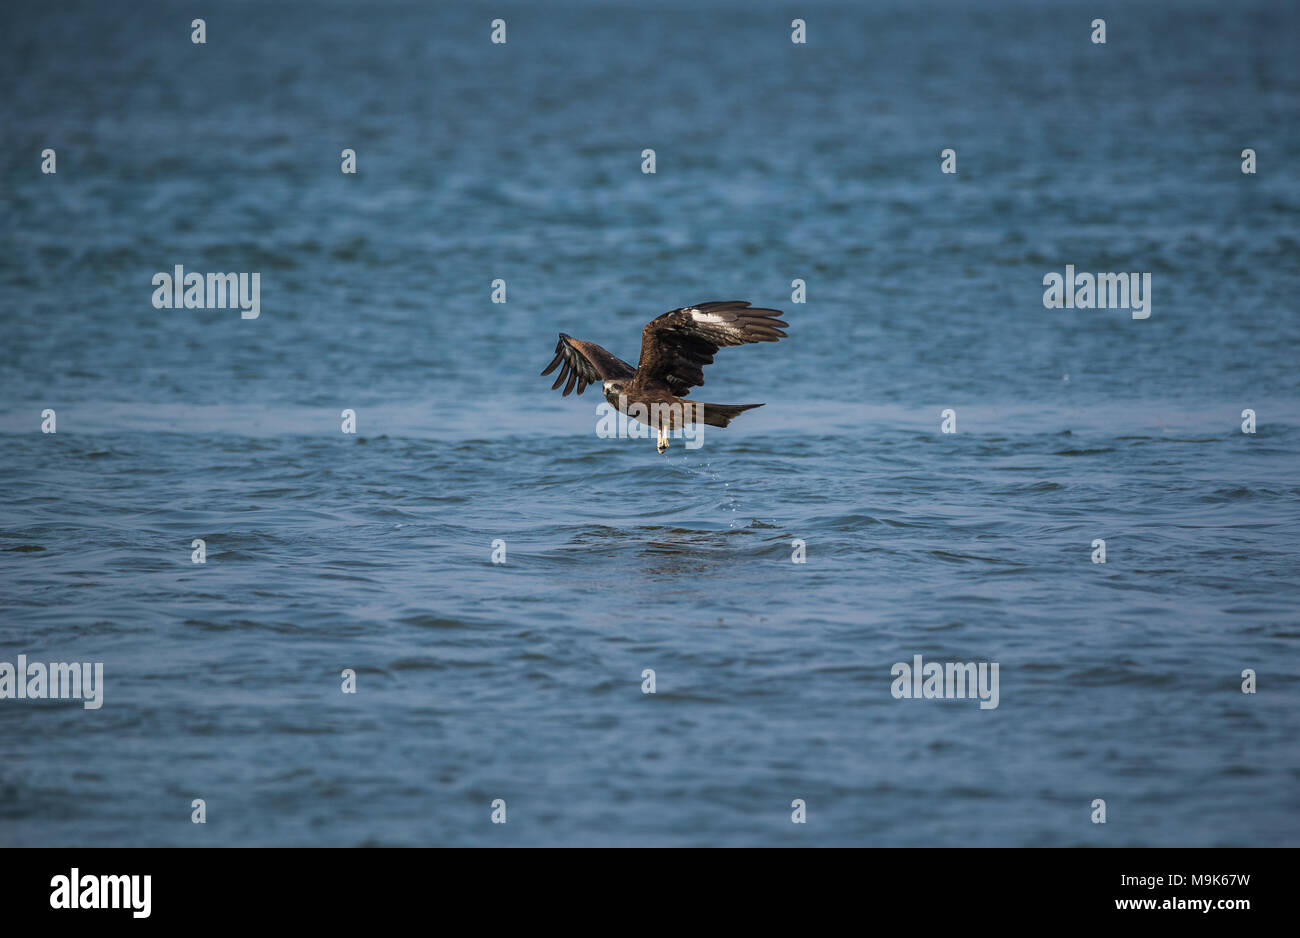 Black Kite bird catching fish from the sea Stock Photo